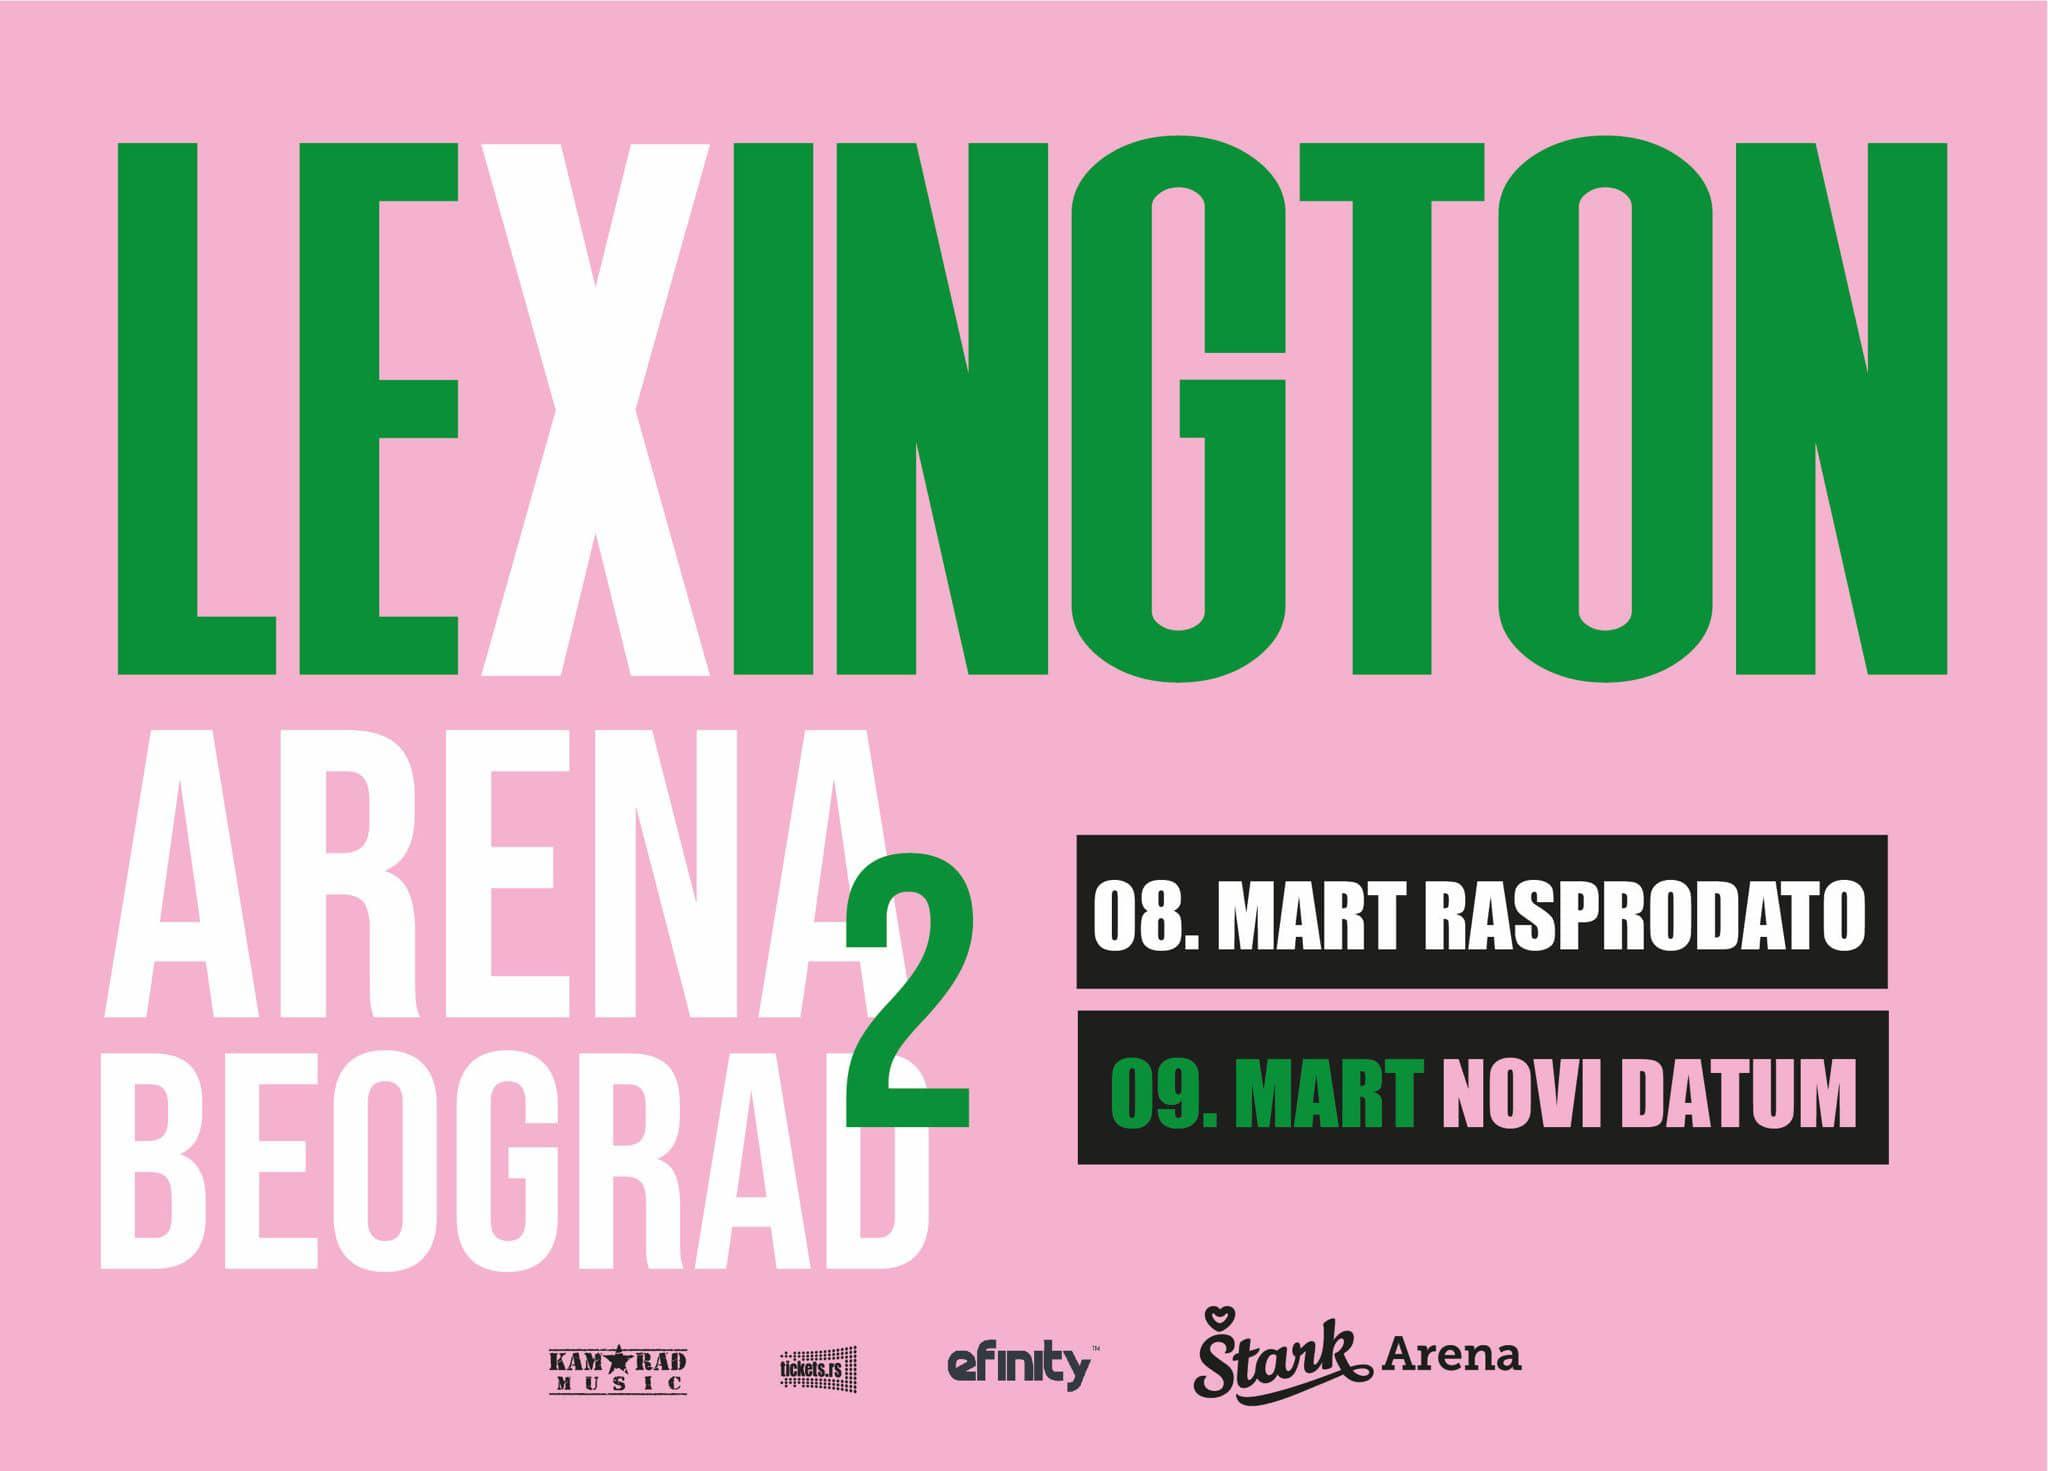 I drugi koncert Lexington benda u martu u areni!